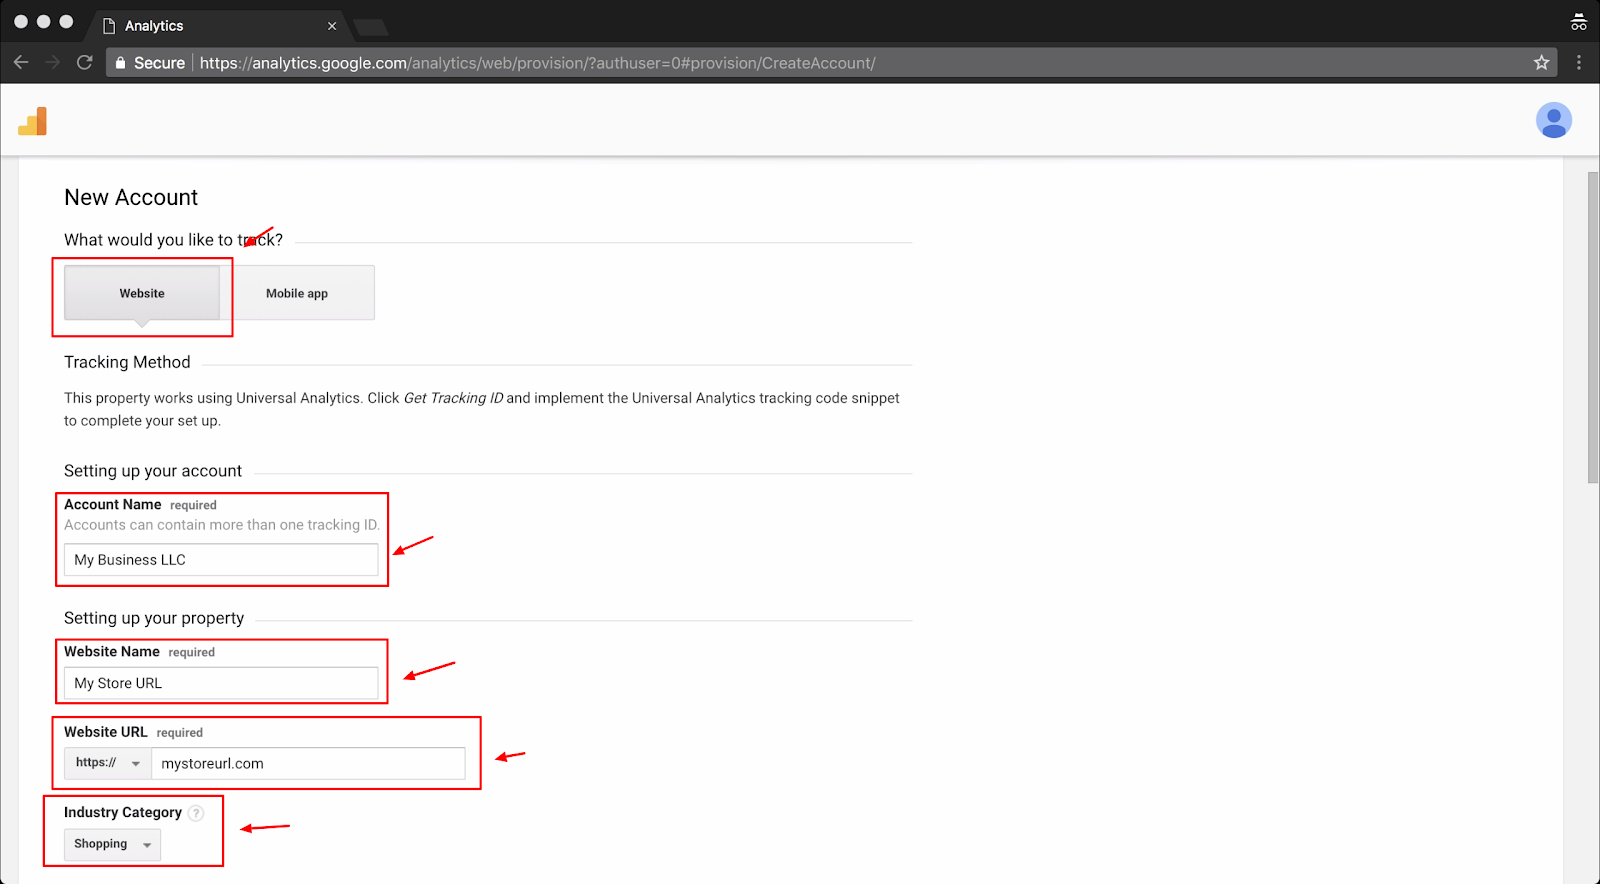 Screenshot showing google analytics settings page